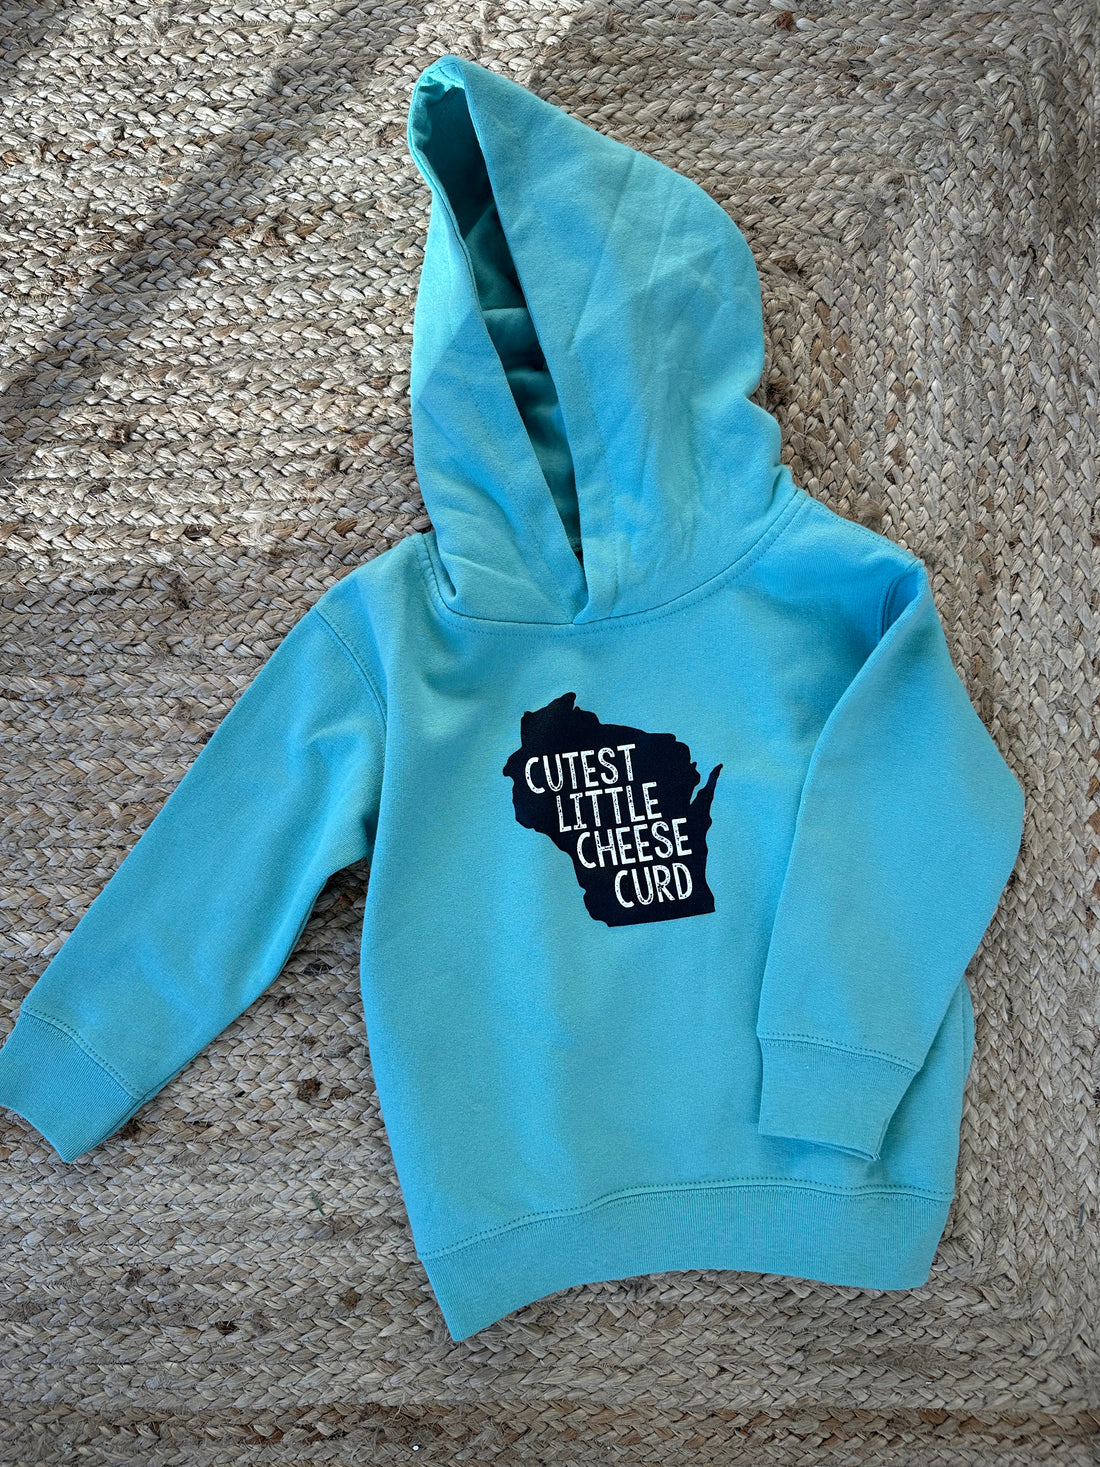 Cutest Little Cheese Curd Sweatshirt Hoodie - Turquoise Blue